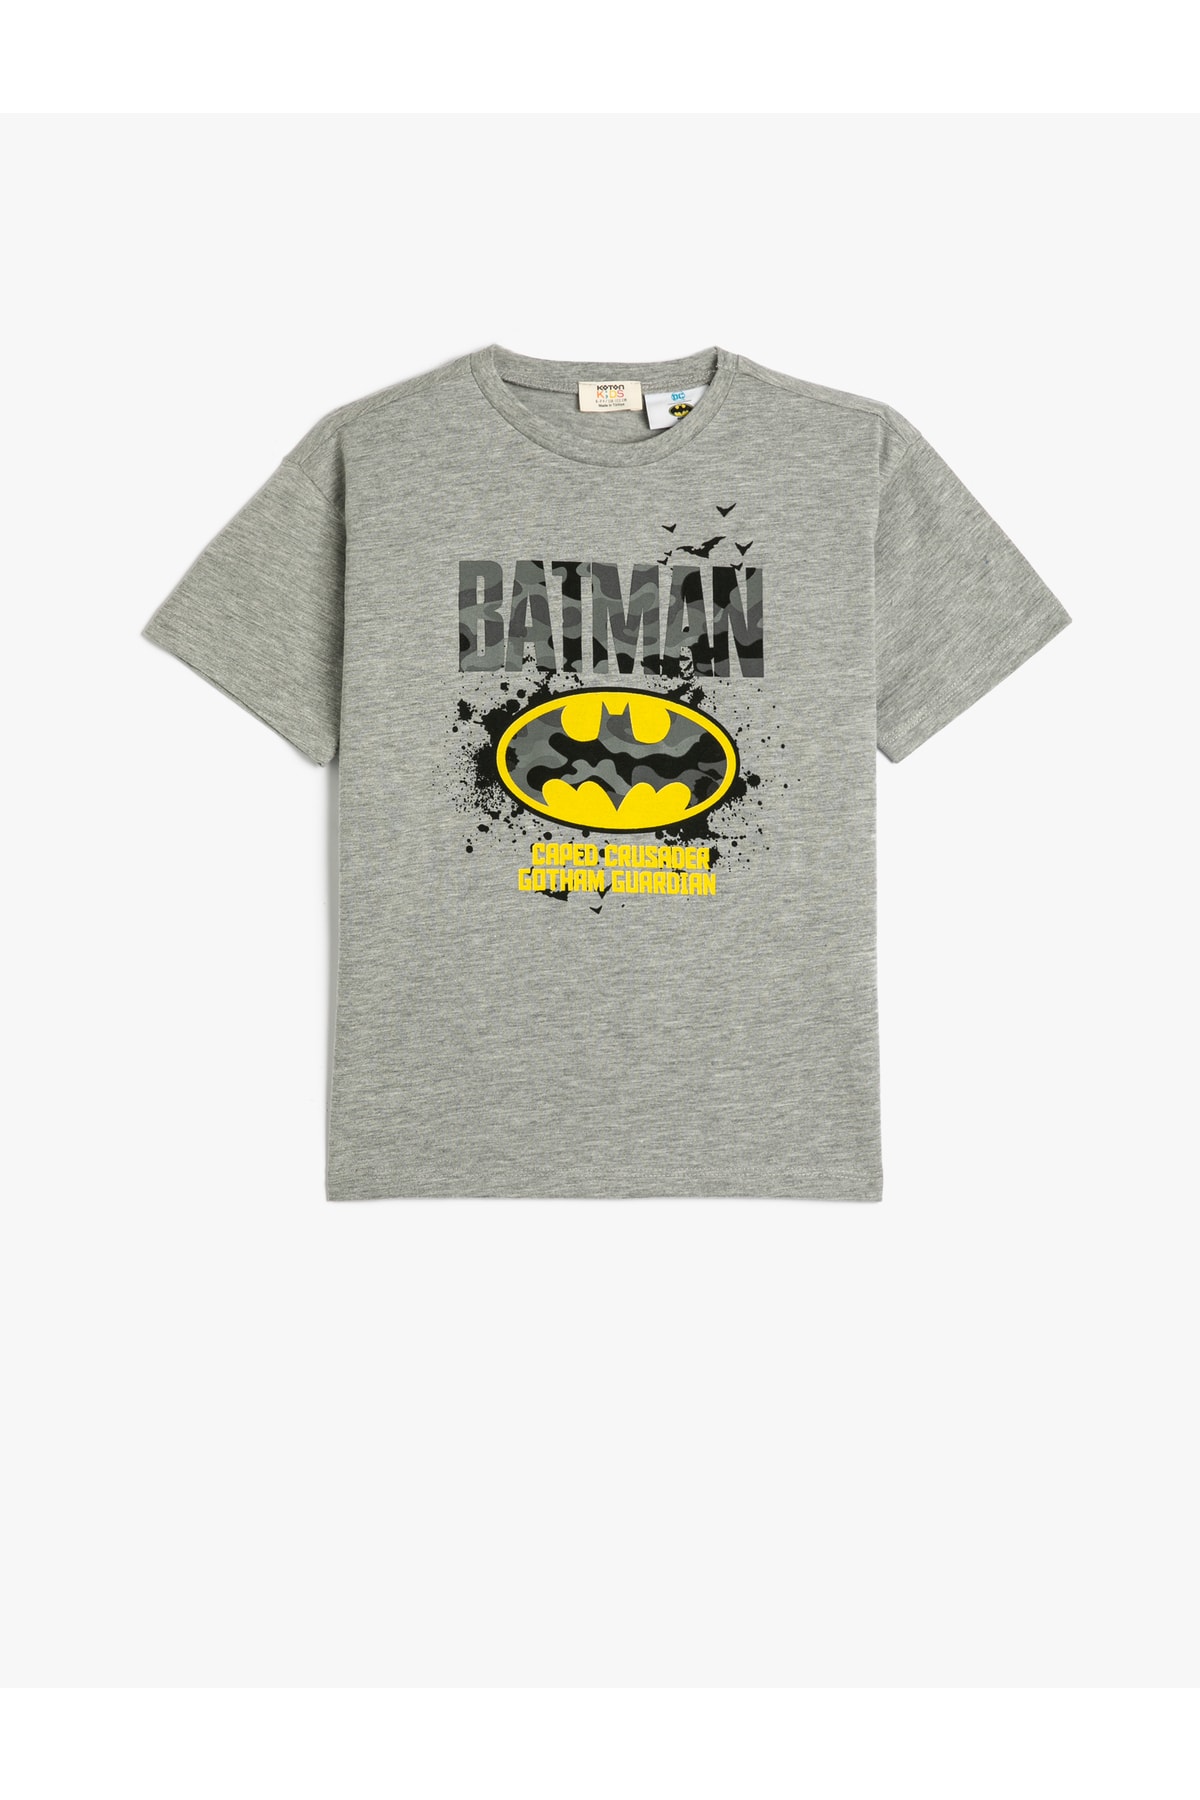 Koton Batman T-Shirt Licensed Short Sleeve Crew Neck